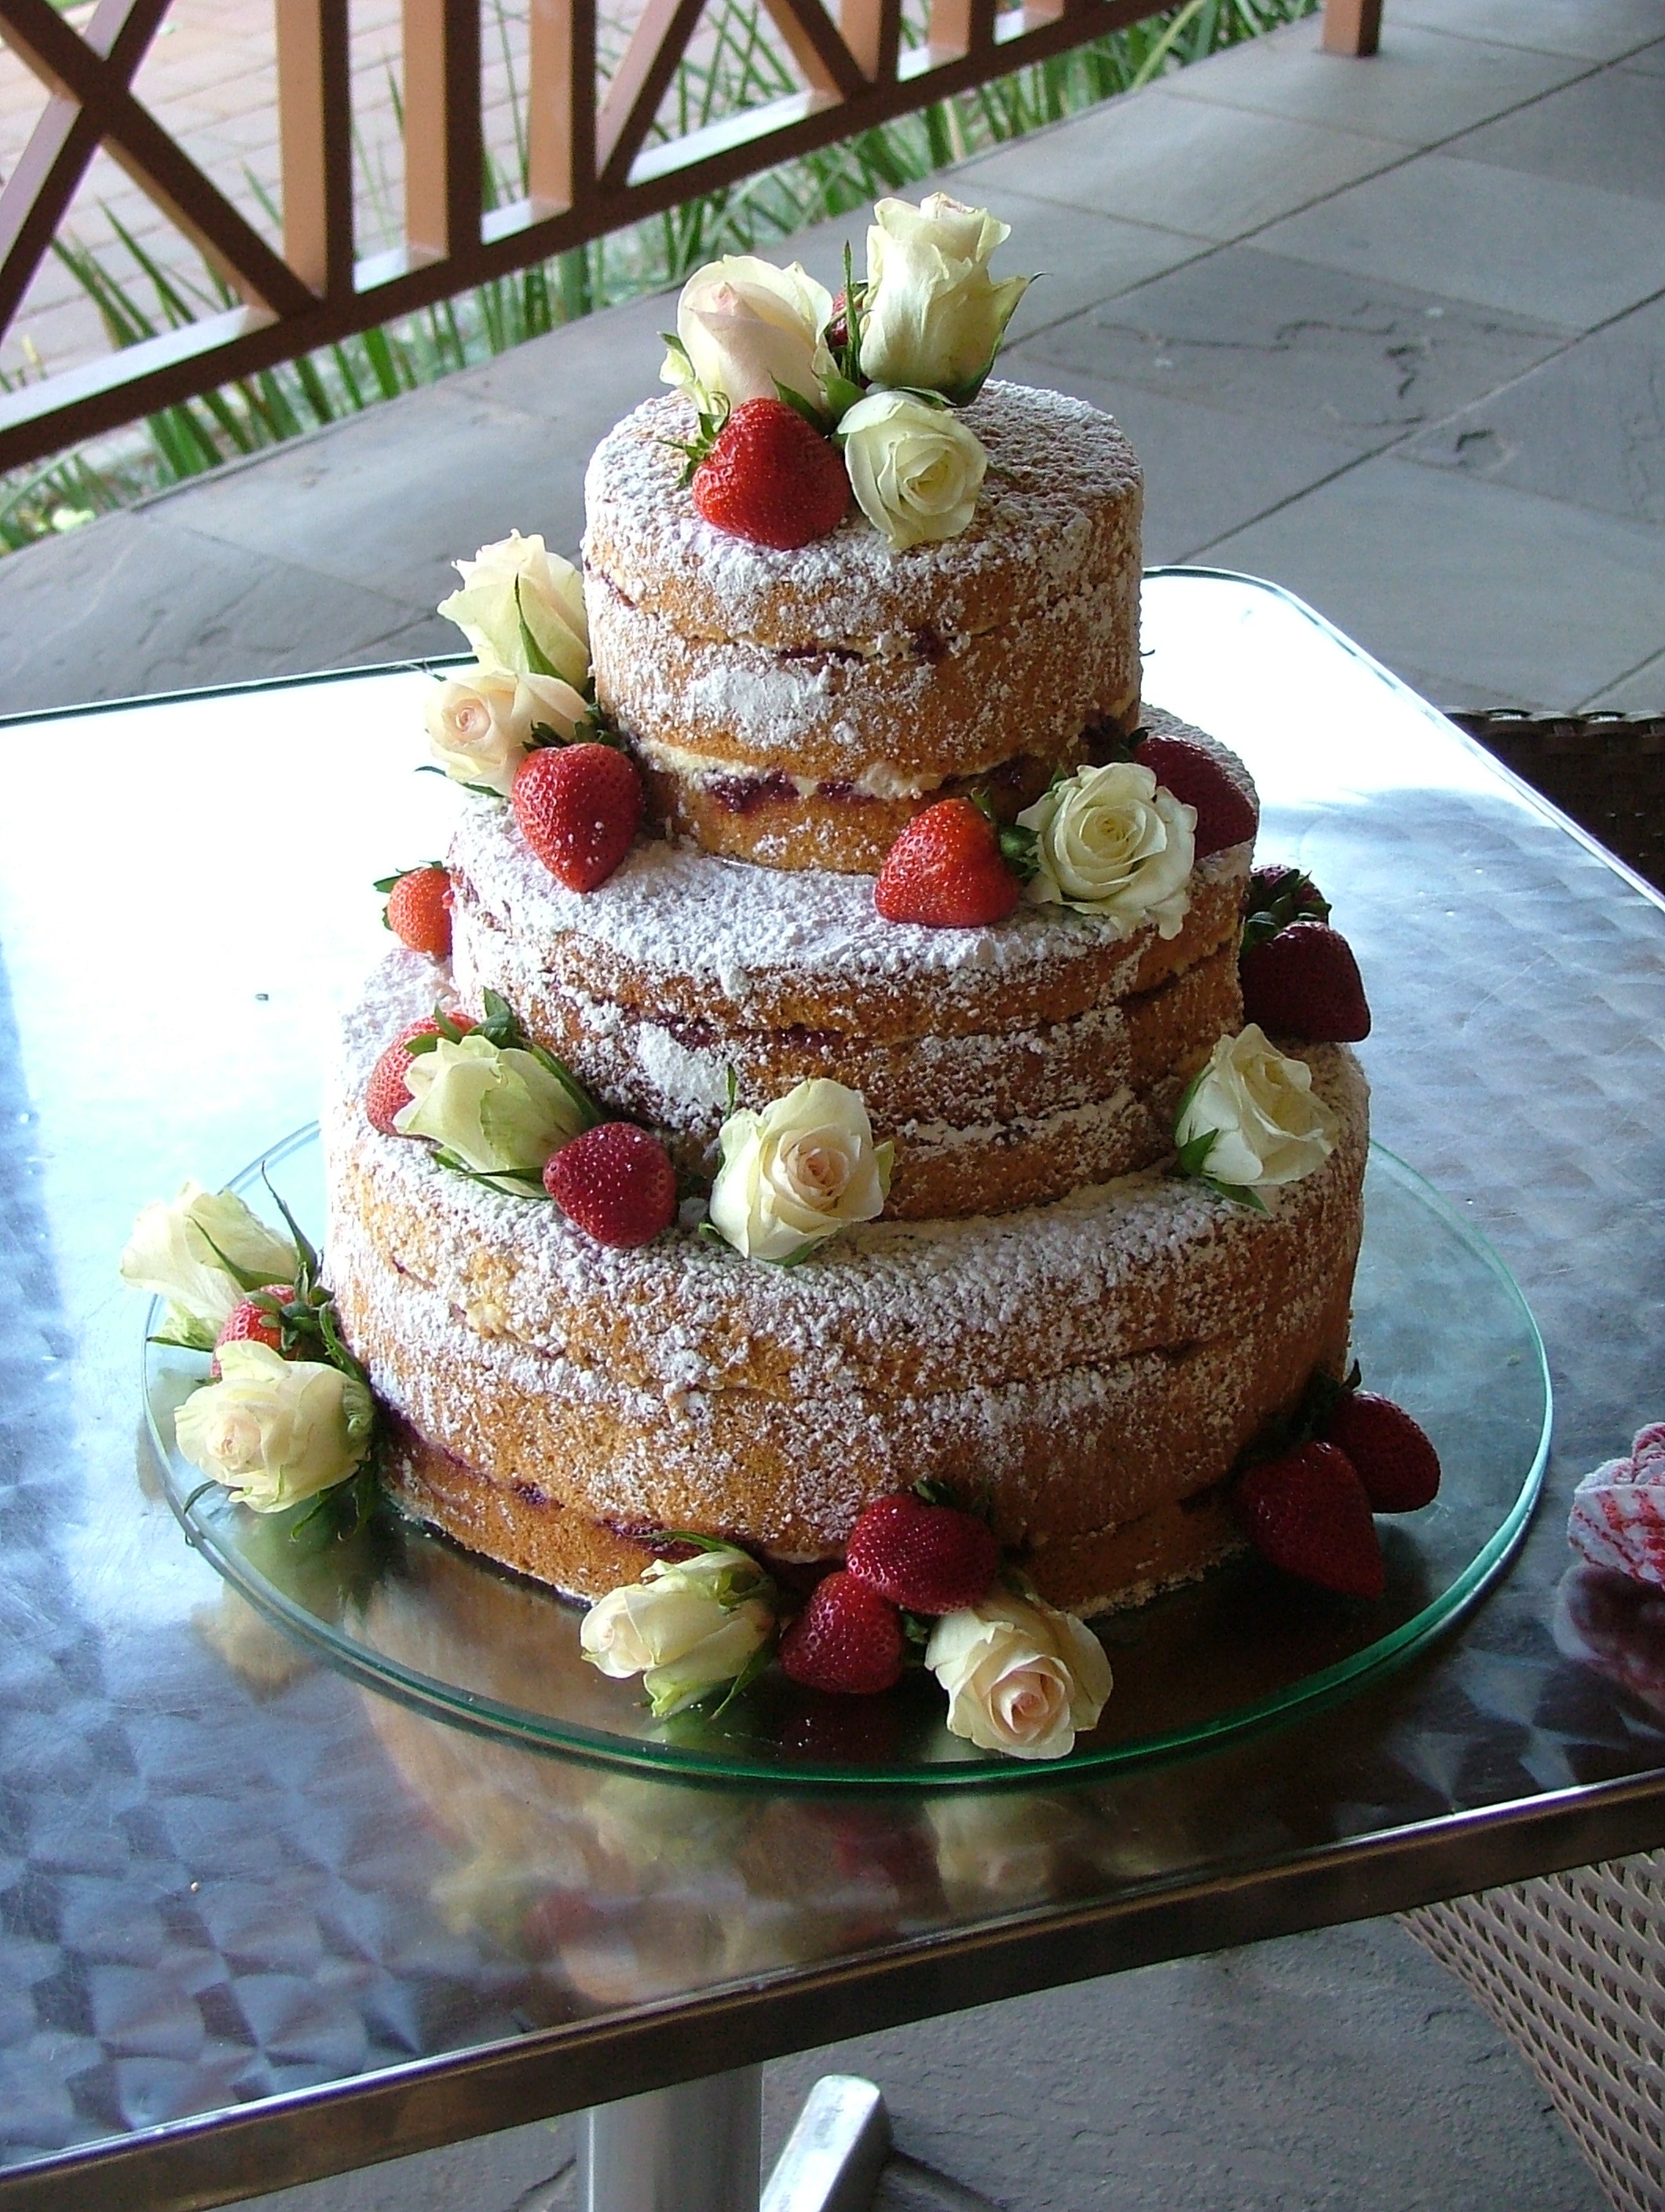 WEDDING CAKE TASTING, 15 January